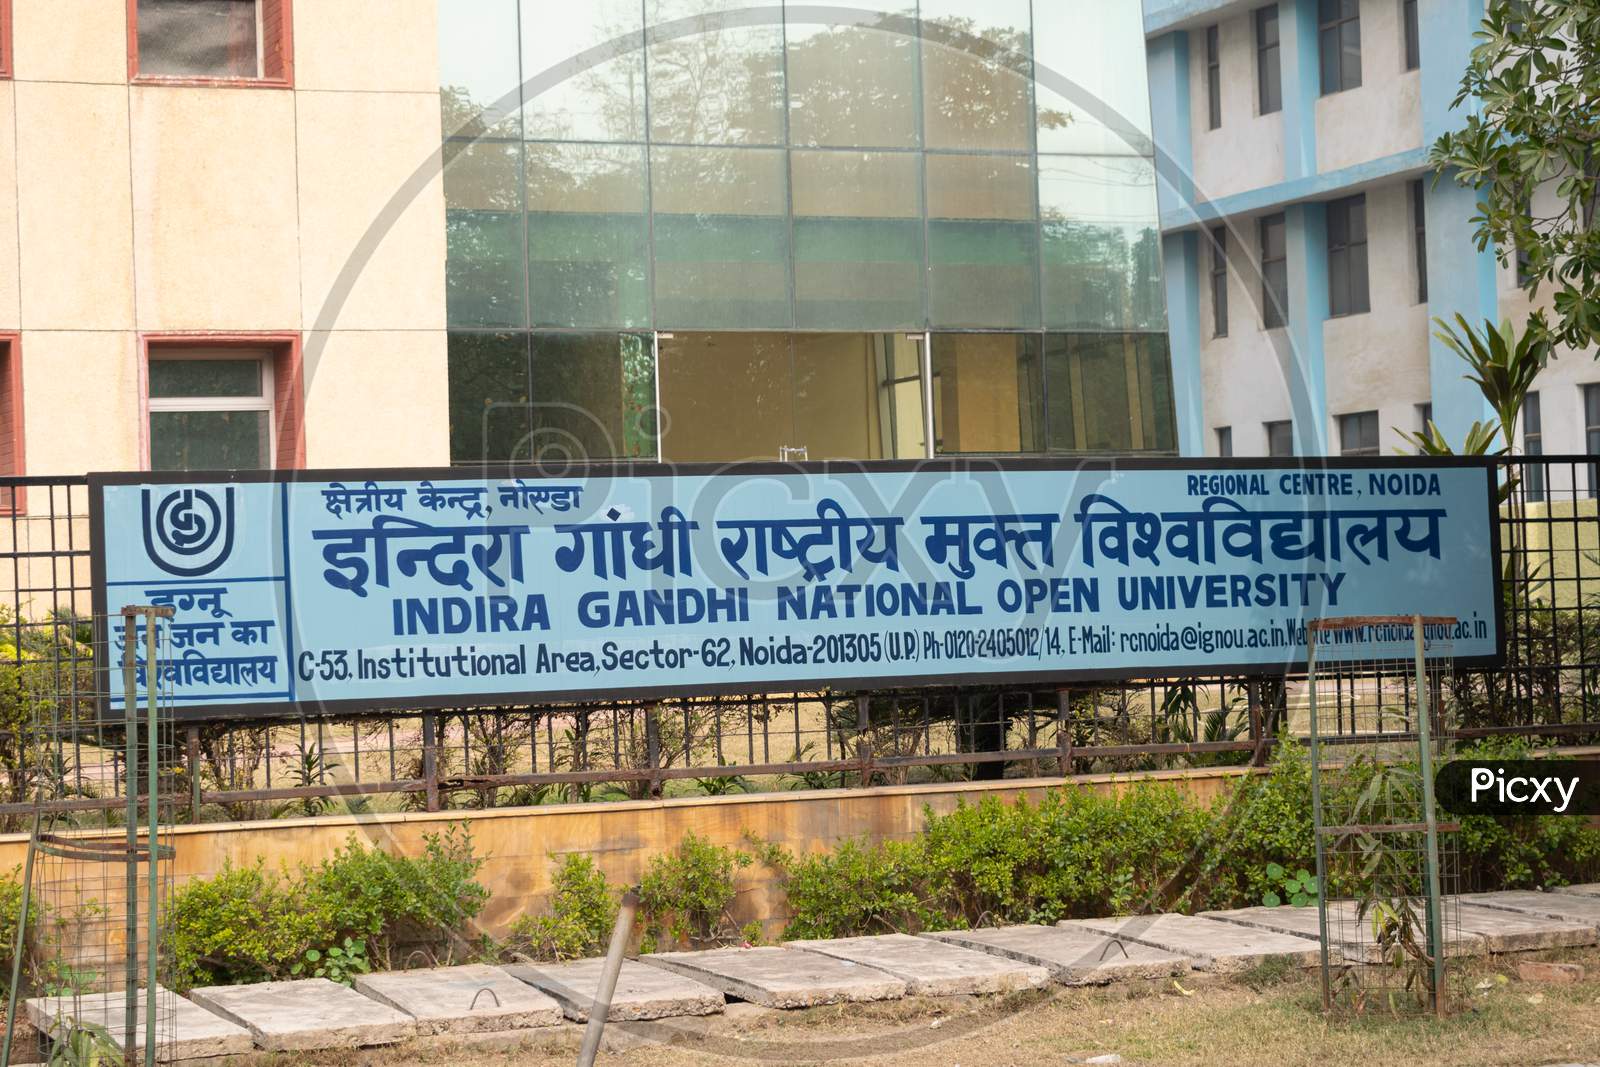 Indira Gandhi National Open University, Noida